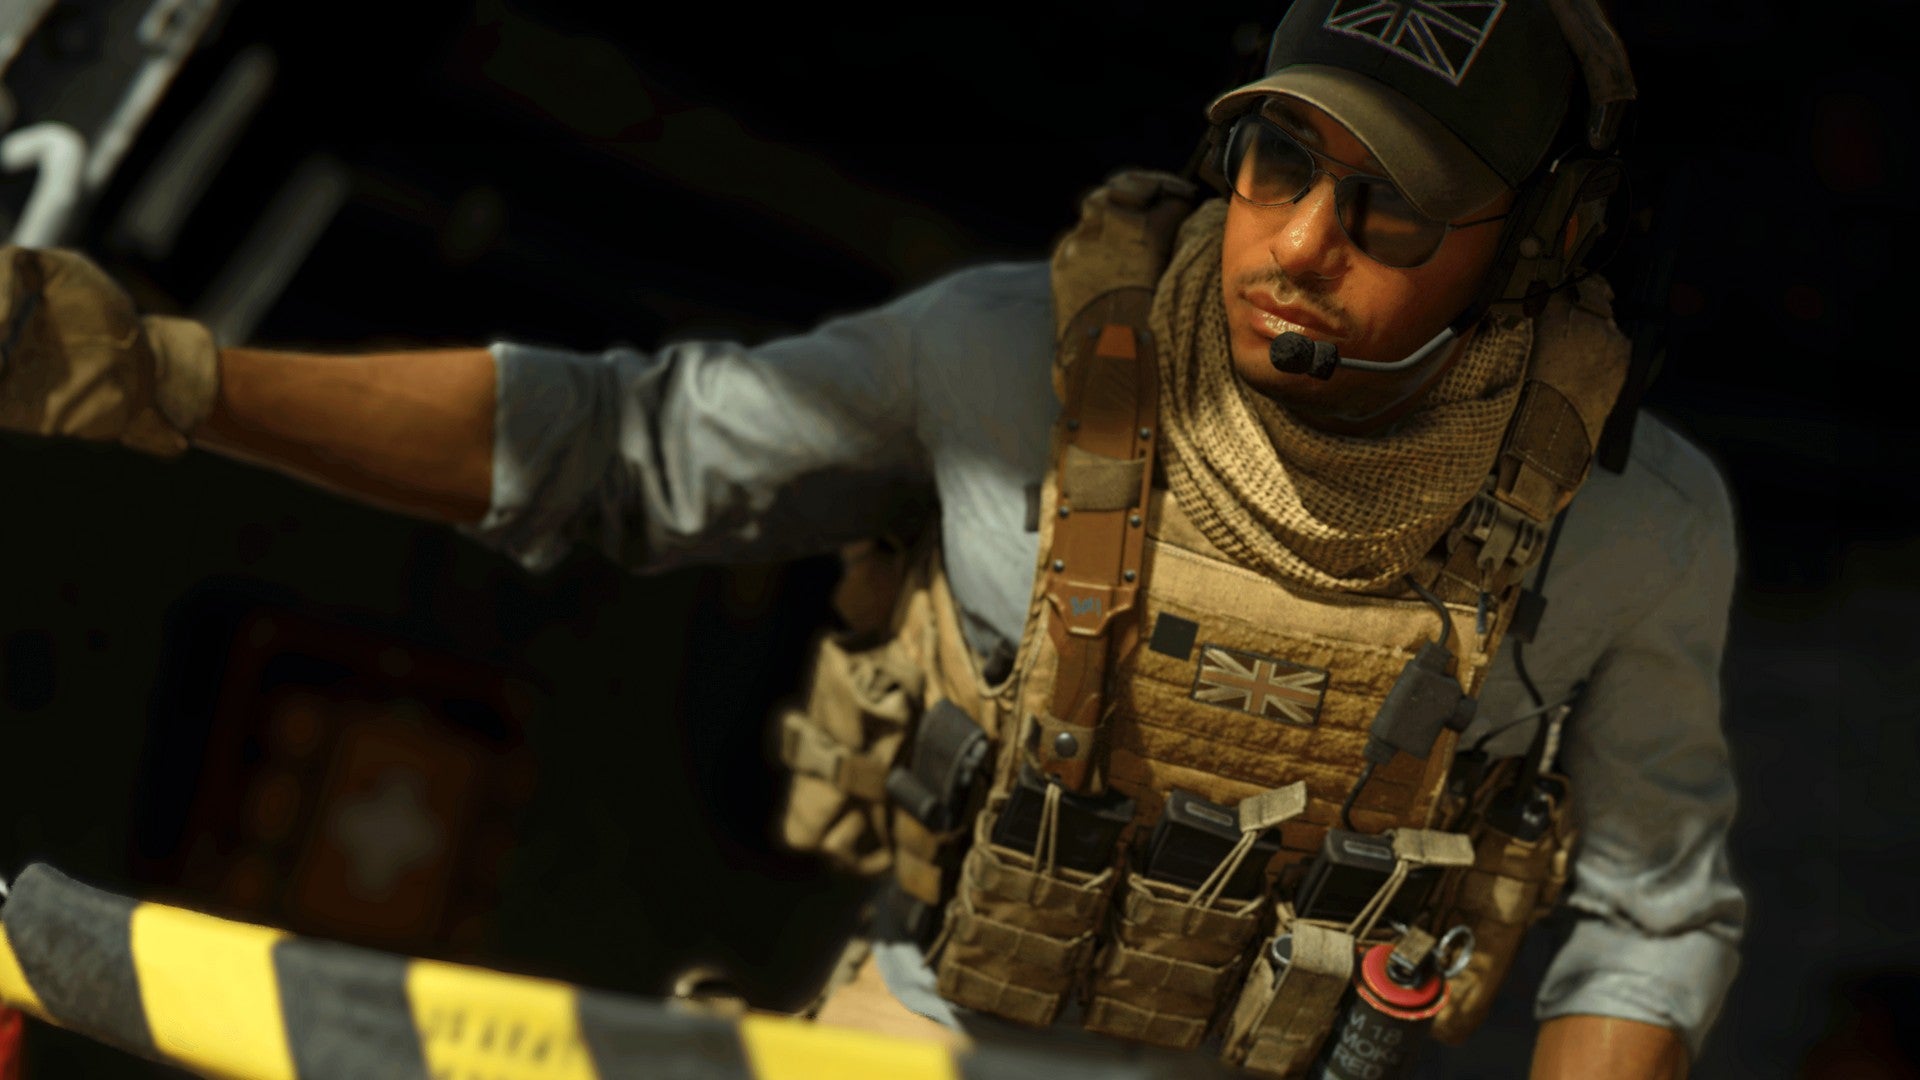 Bilder zu Call of Duty: Großes Event für September angekündigt